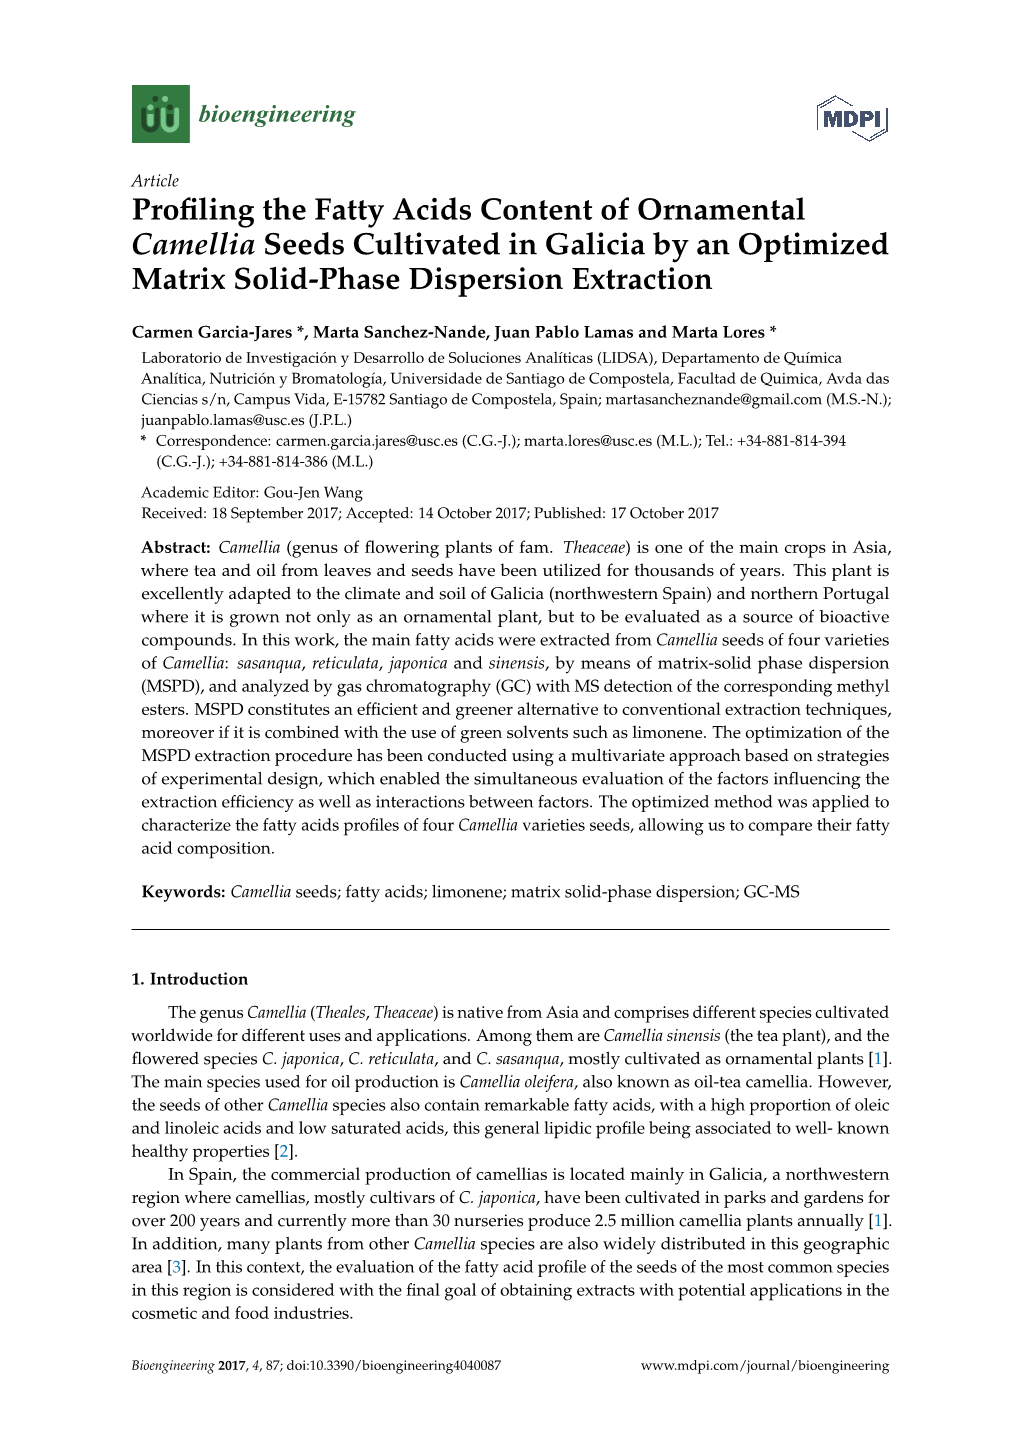 Profiling the Fatty Acids Content of Ornamental Camellia Seeds